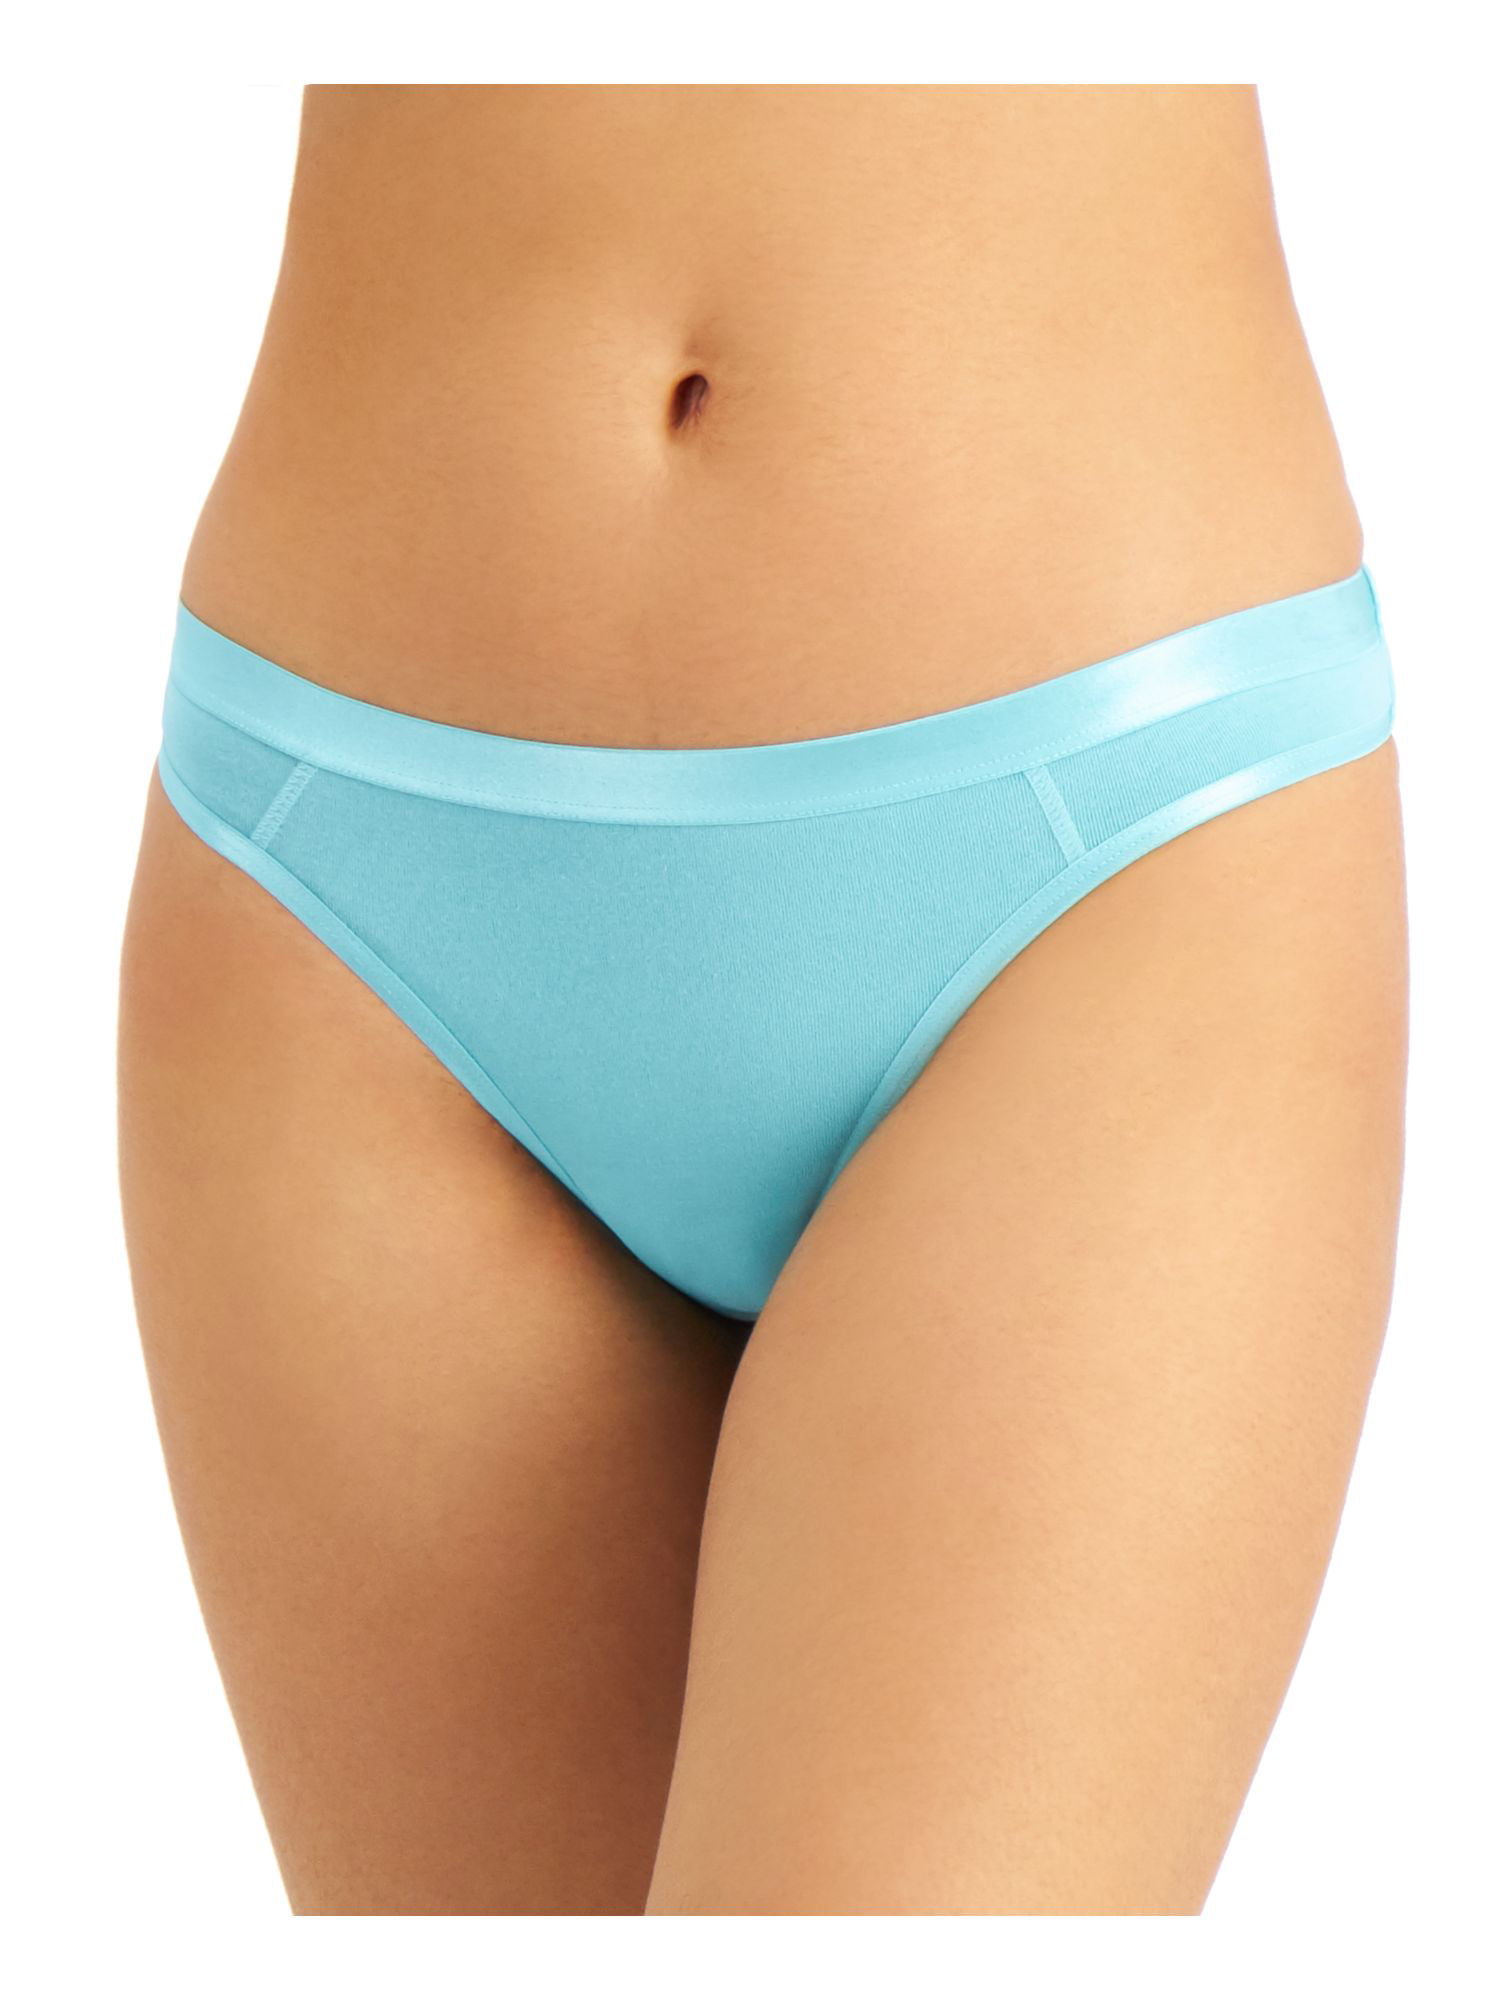 JENNI Intimates Aqua Decorative Front Seams Thong Underwear L